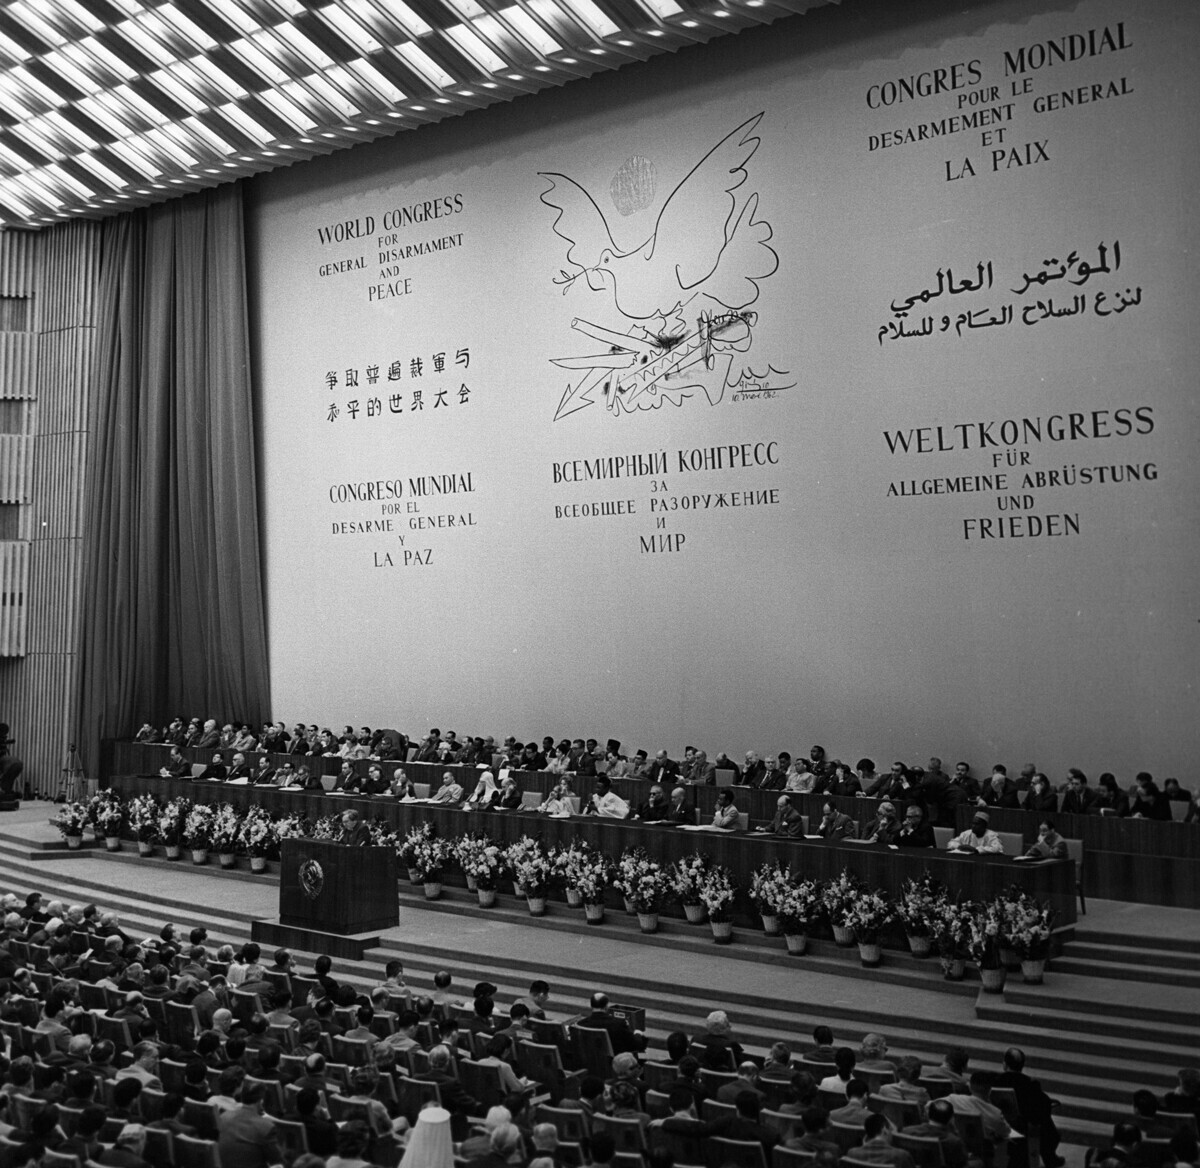 Pembukaan Kongres Dunia untuk Perlucutan Senjata dan Perdamaian Global